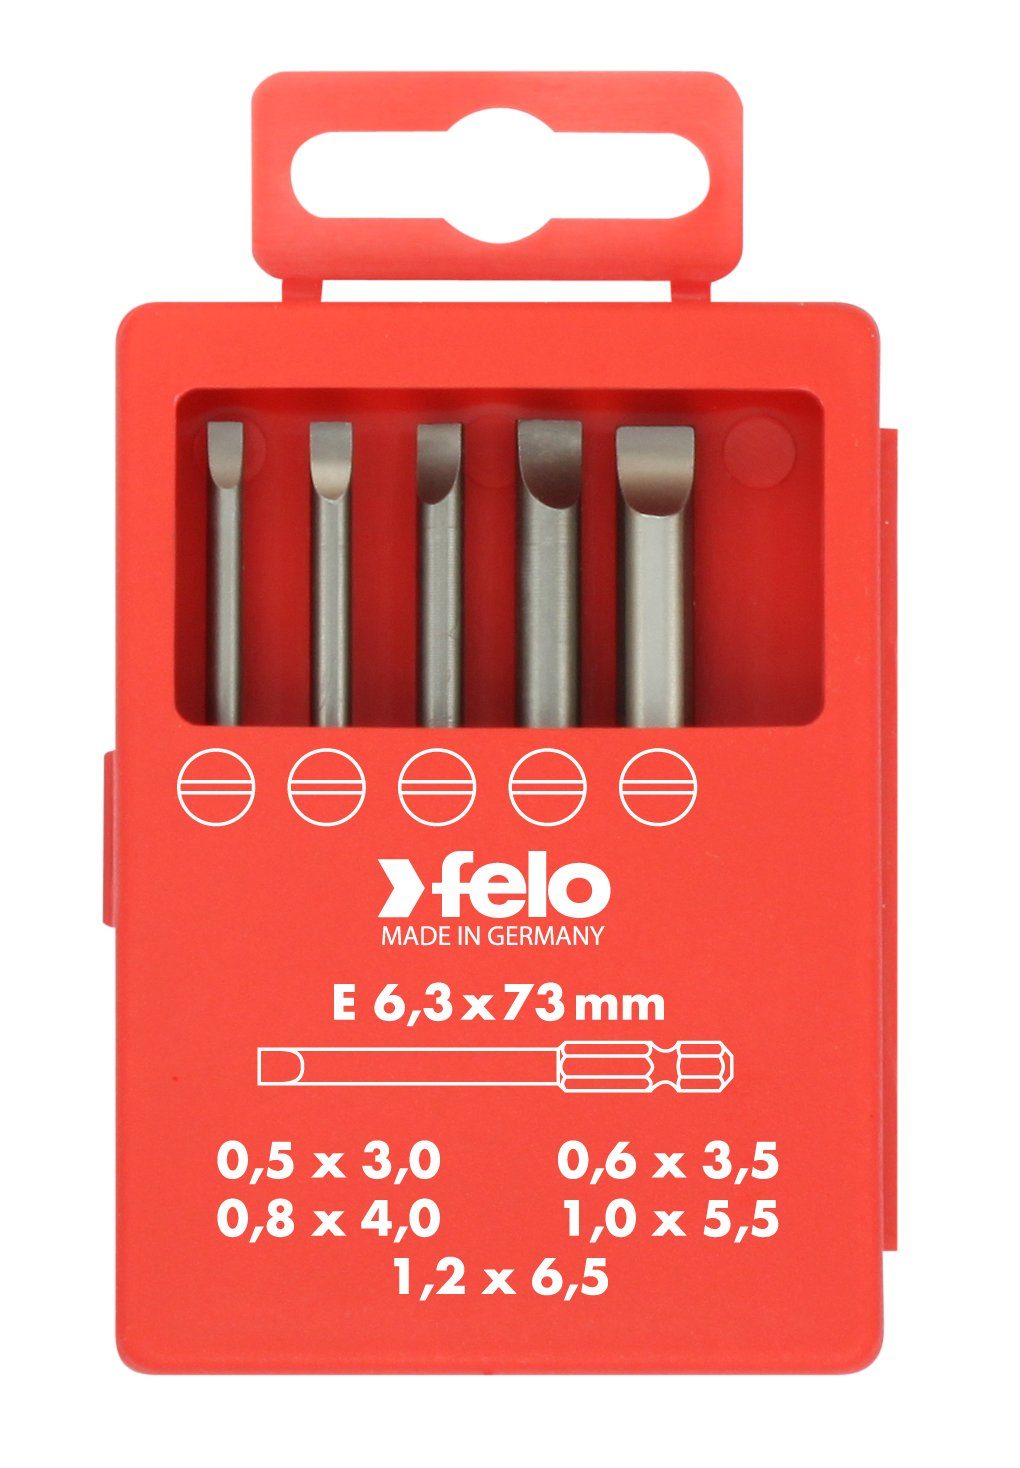 Felo Bit-Set Felo 3,5, Bit 73 x 0,6 x 1,0 1 4,0, x Profi 1,2 x 0,5 je Bitbox x 0,8 3,0, 6,5 5,5, mm